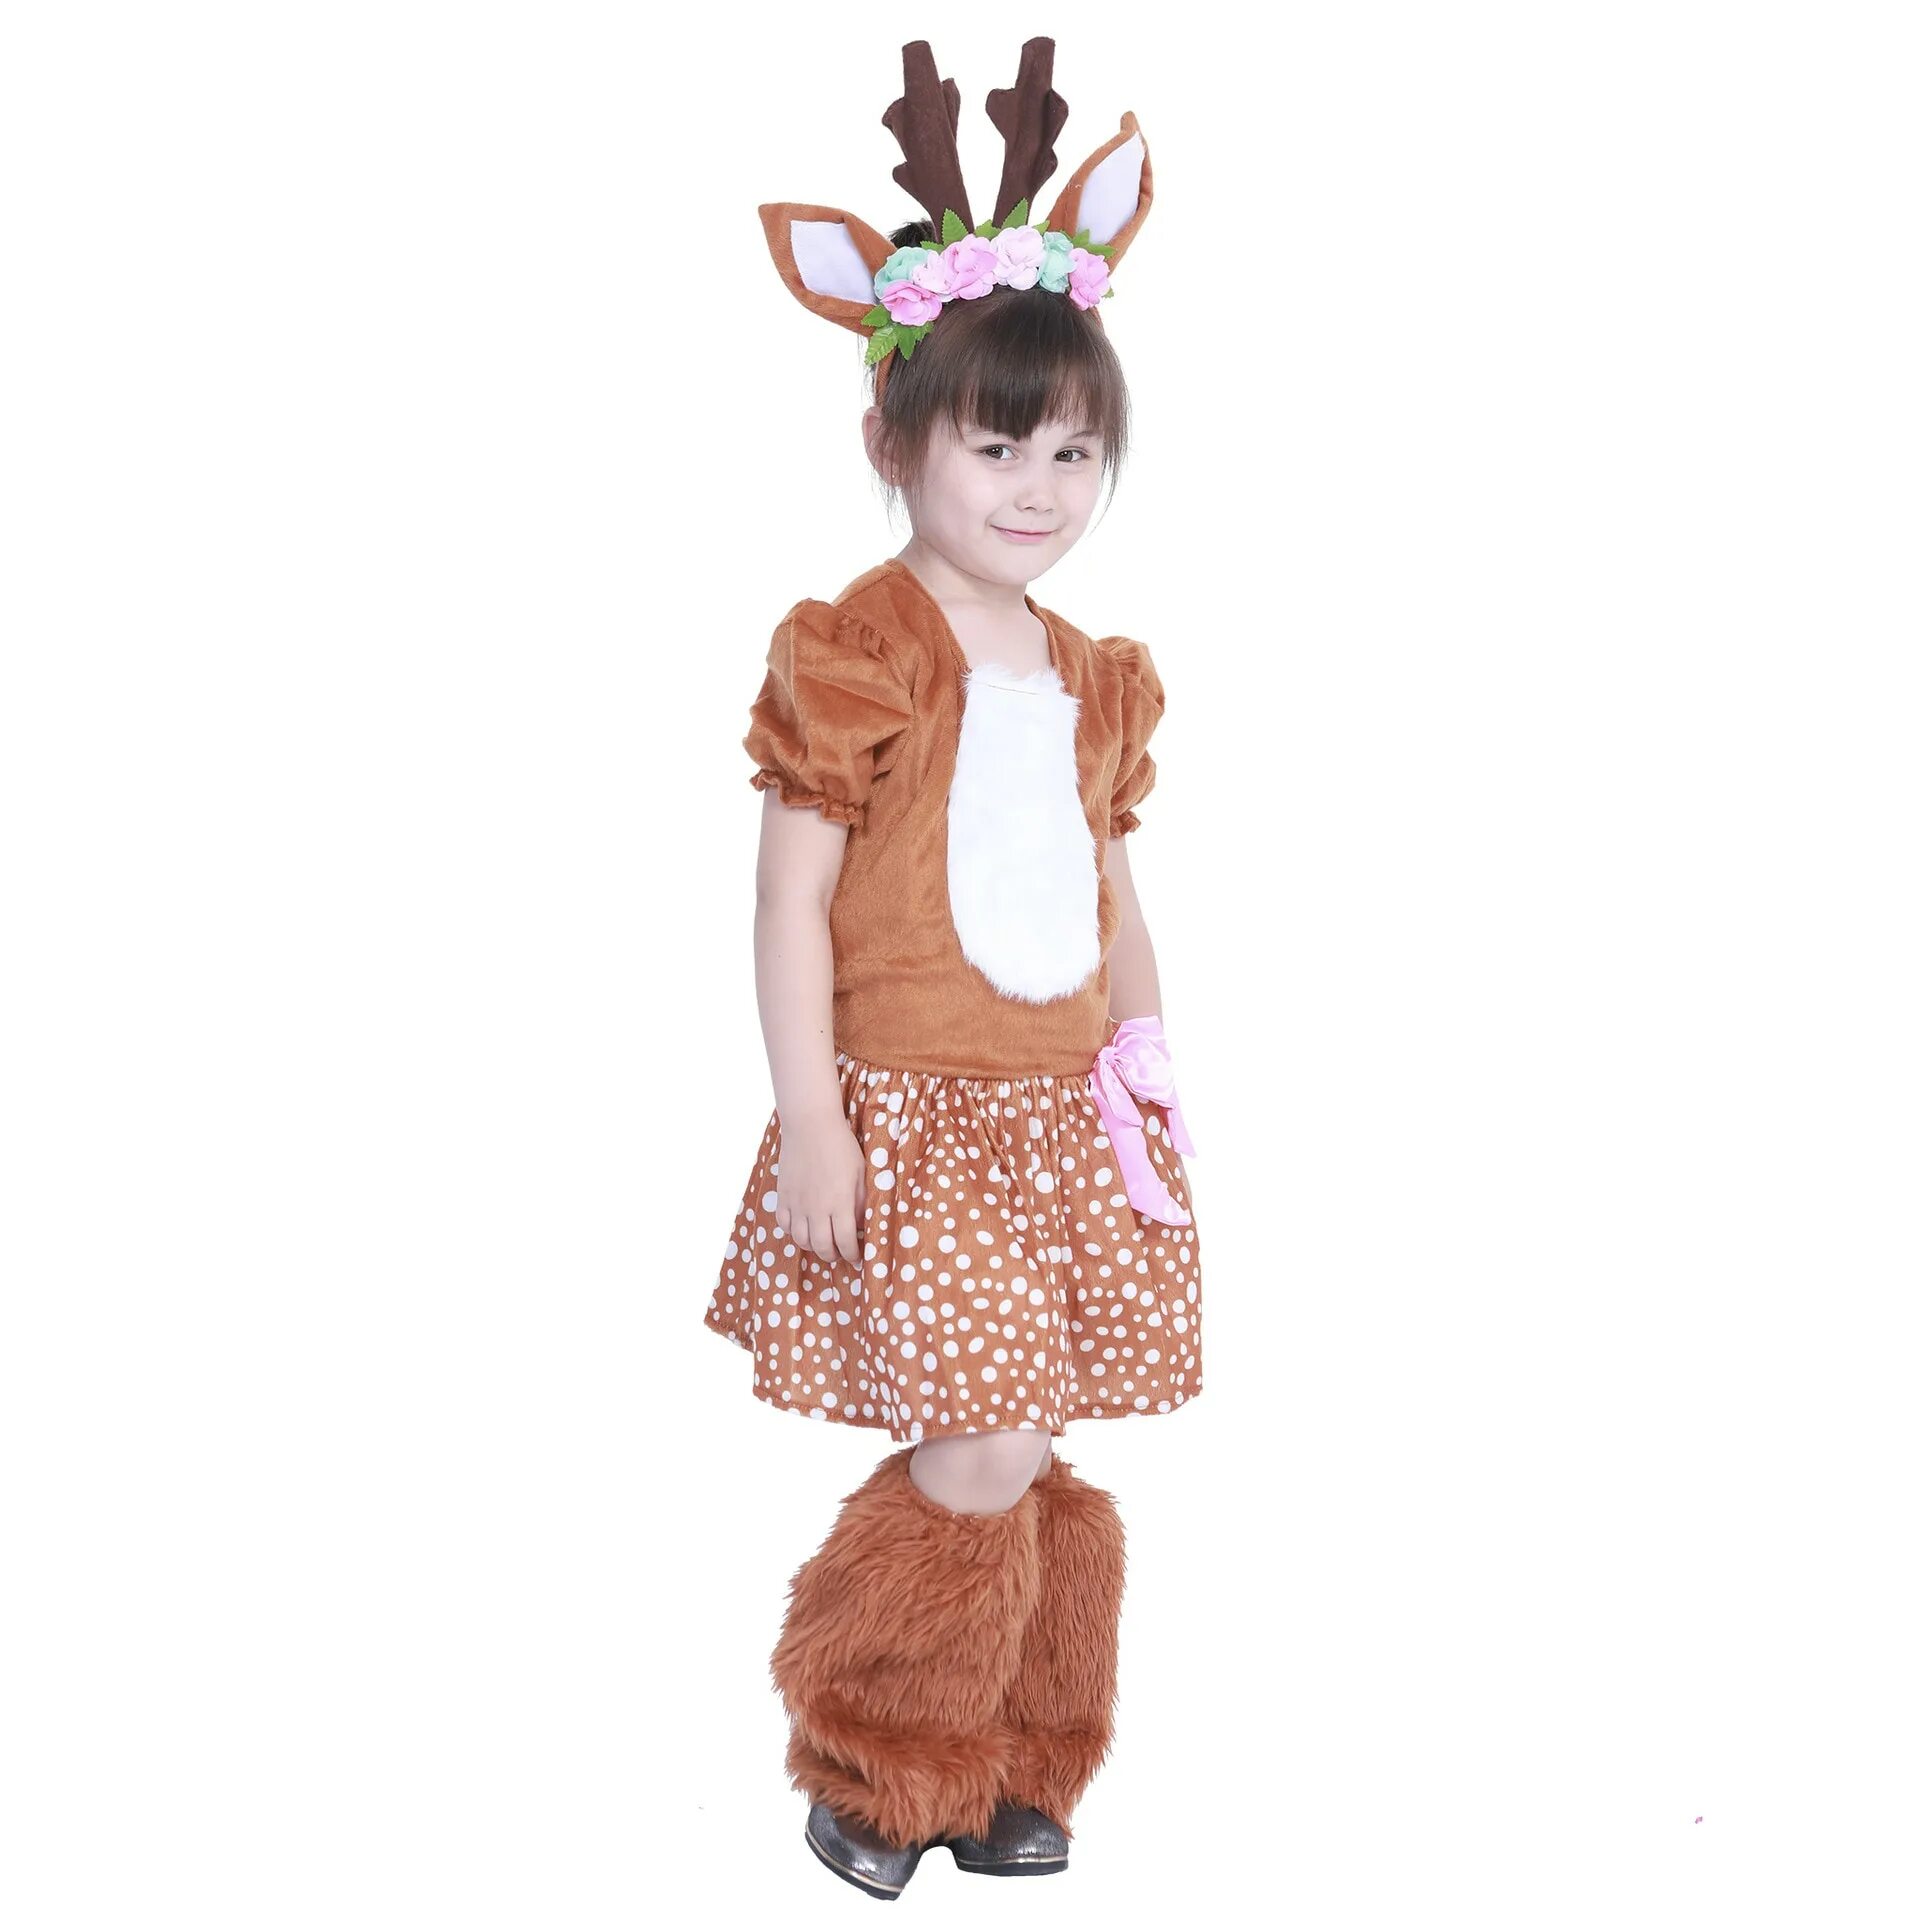 Костюм оленя. Костюм олененка для девочки. Костюм оленя для девочки. Карнавальный костюм оленя для девочки.